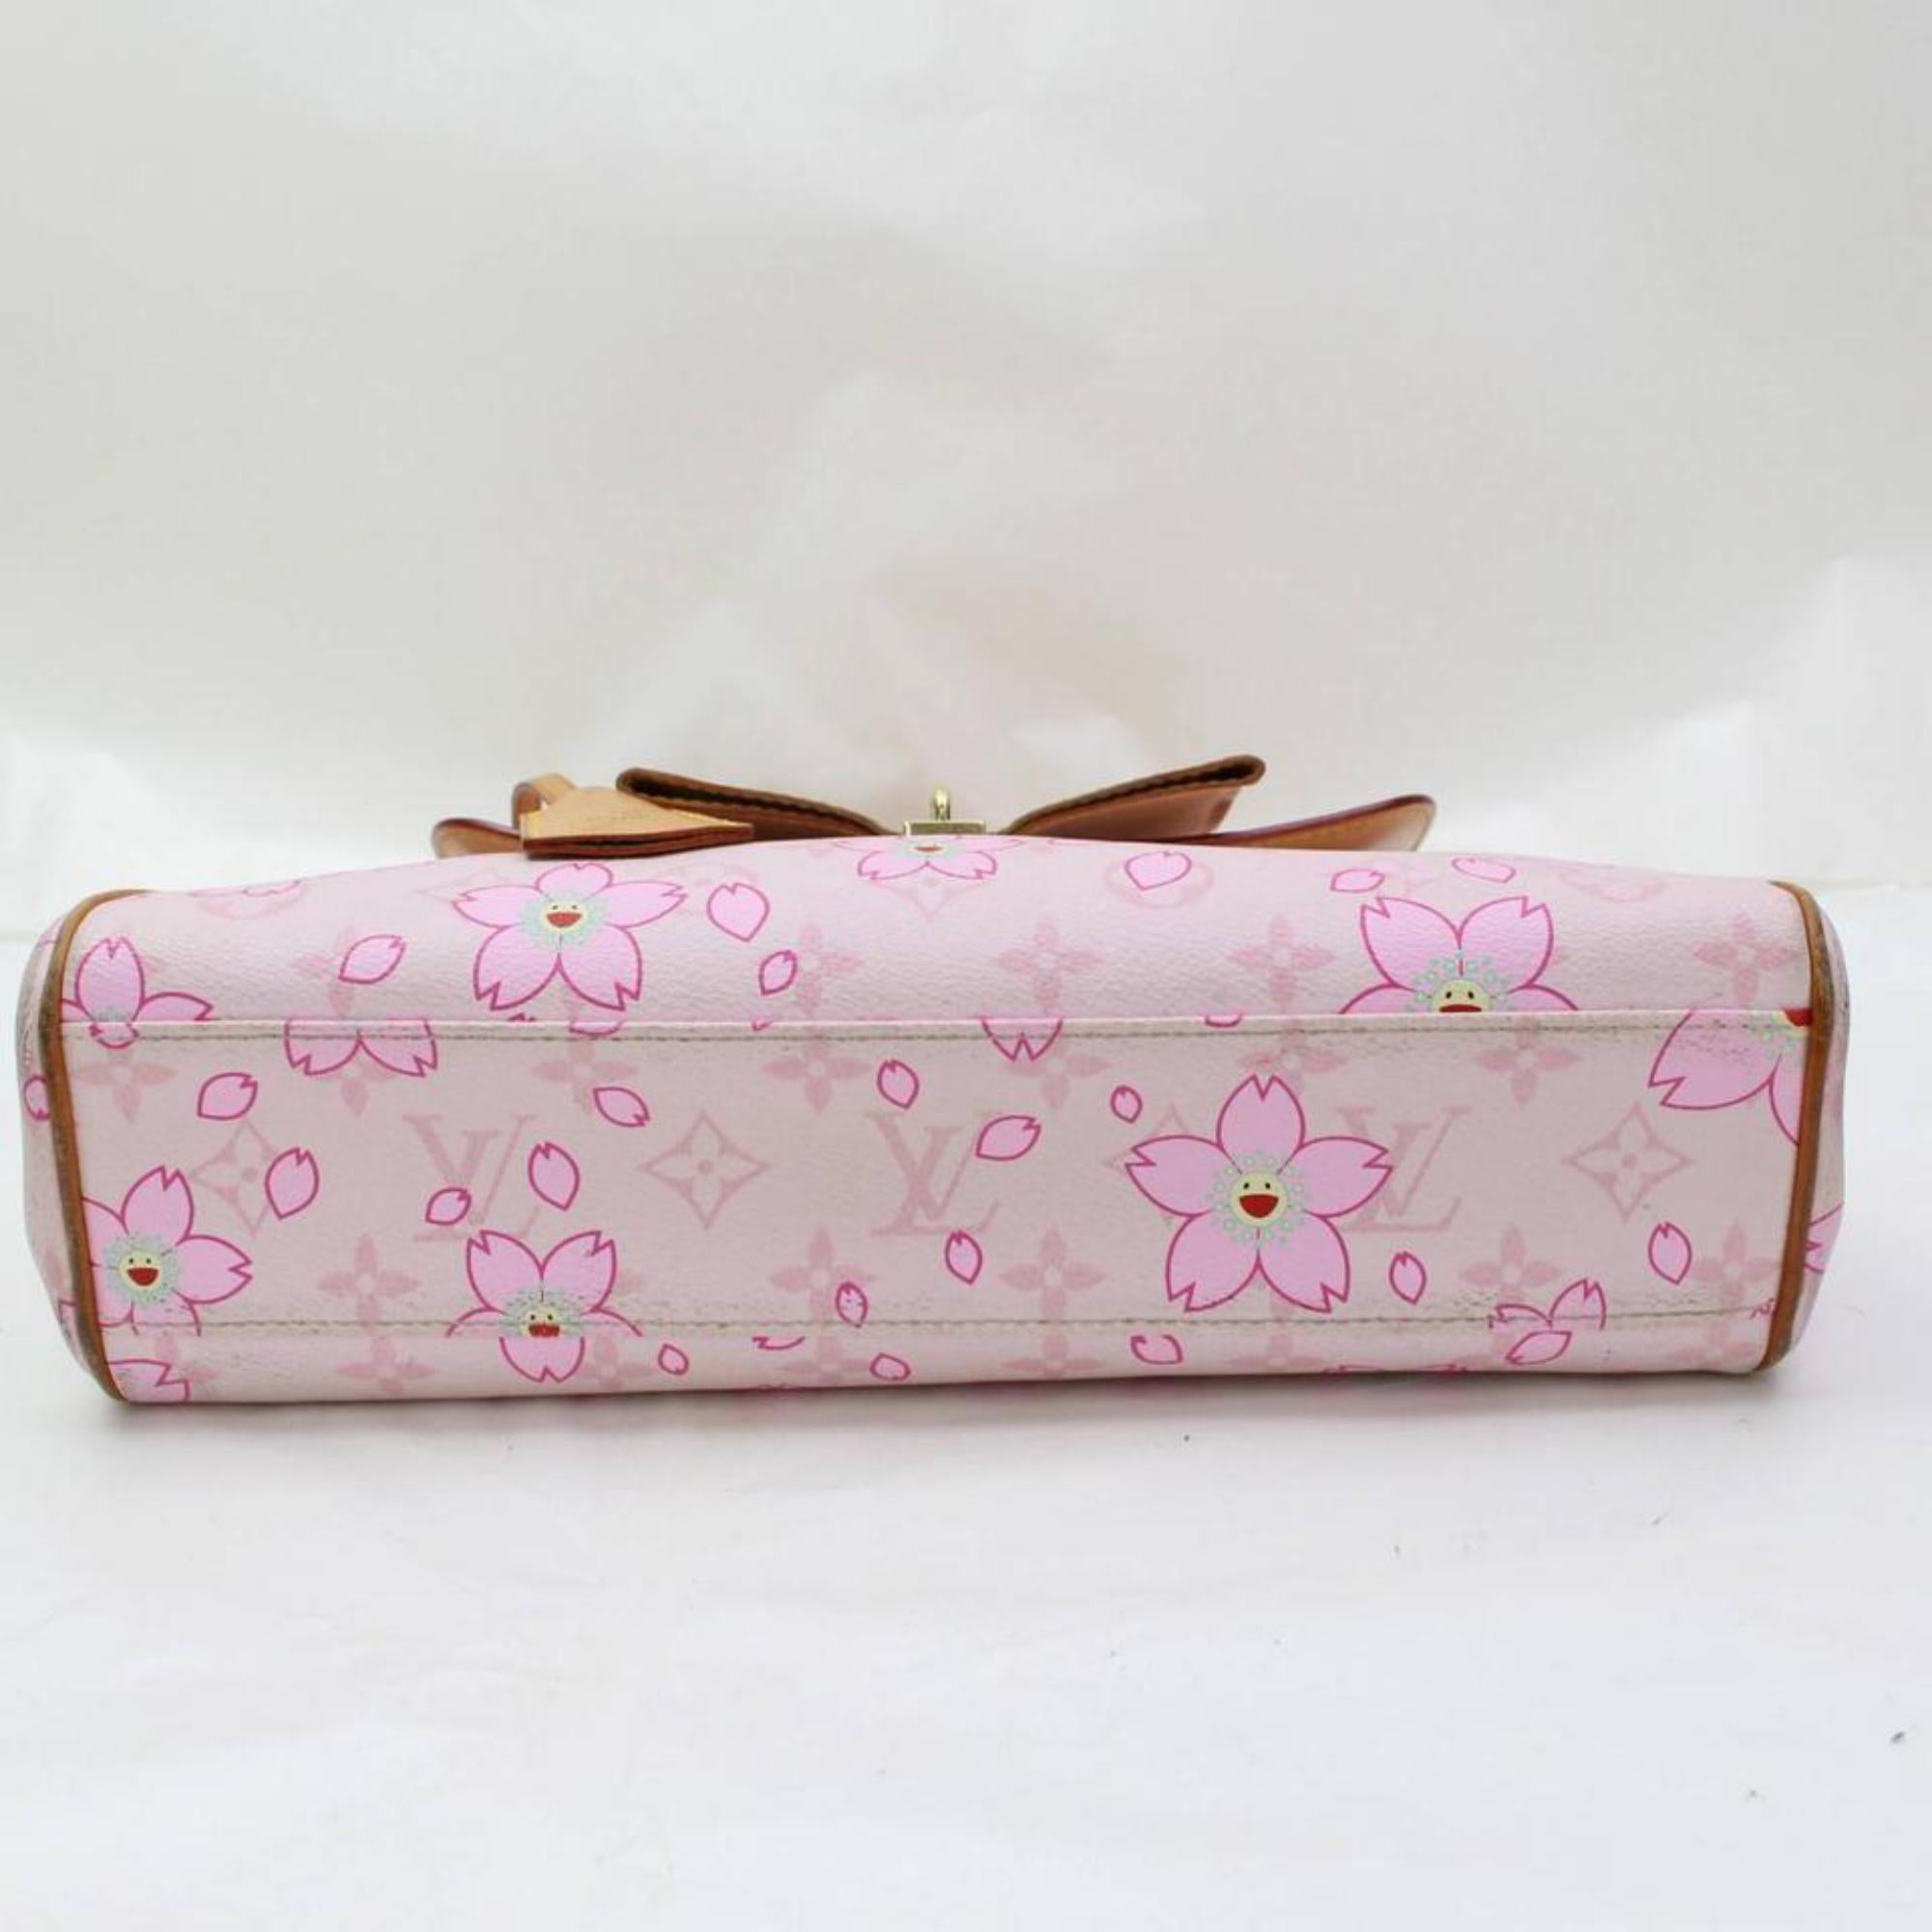 Louis Vuitton Cherry Blossom Sac Retro 867220 Pink Coated Canvas satchel 1